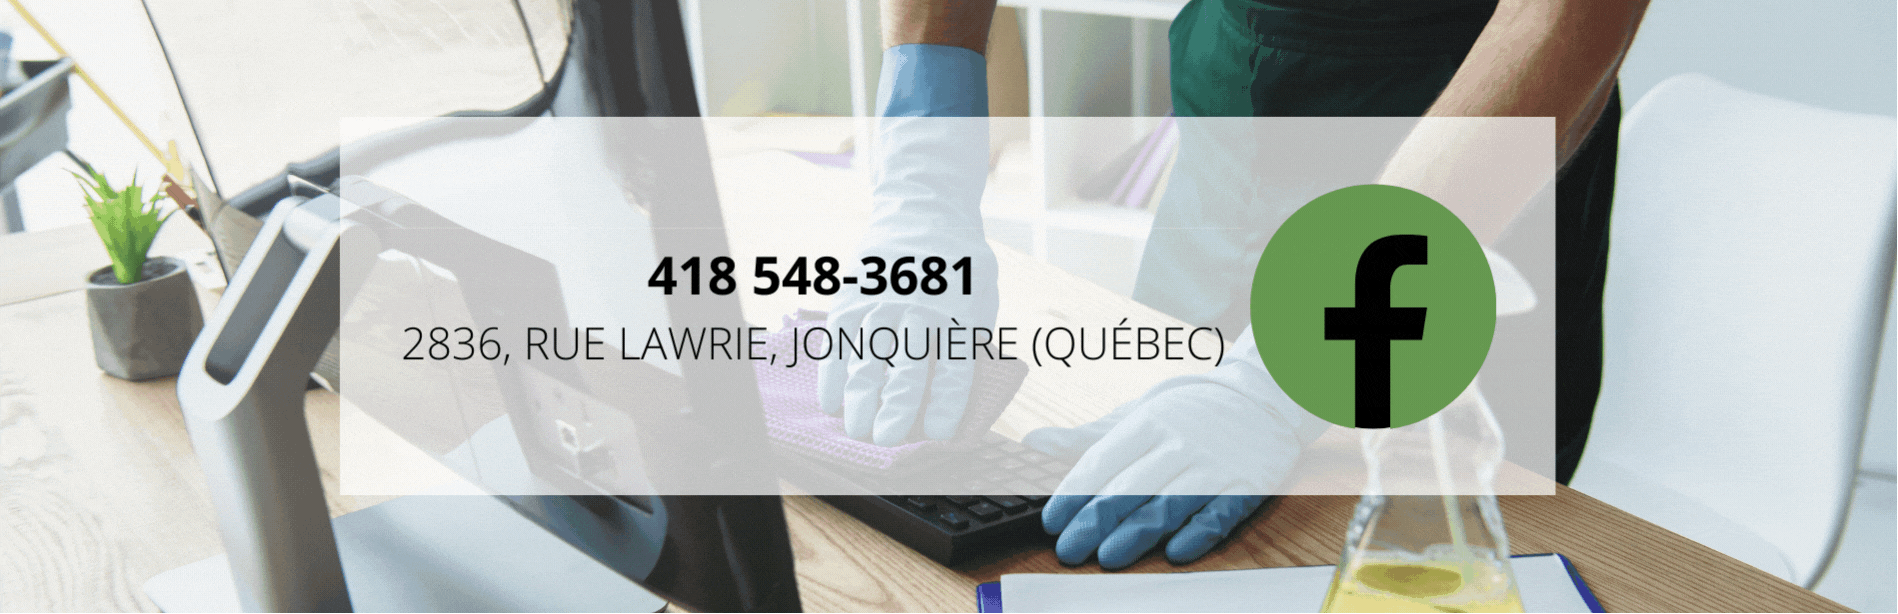 Service dentretien JES Saguenay 1